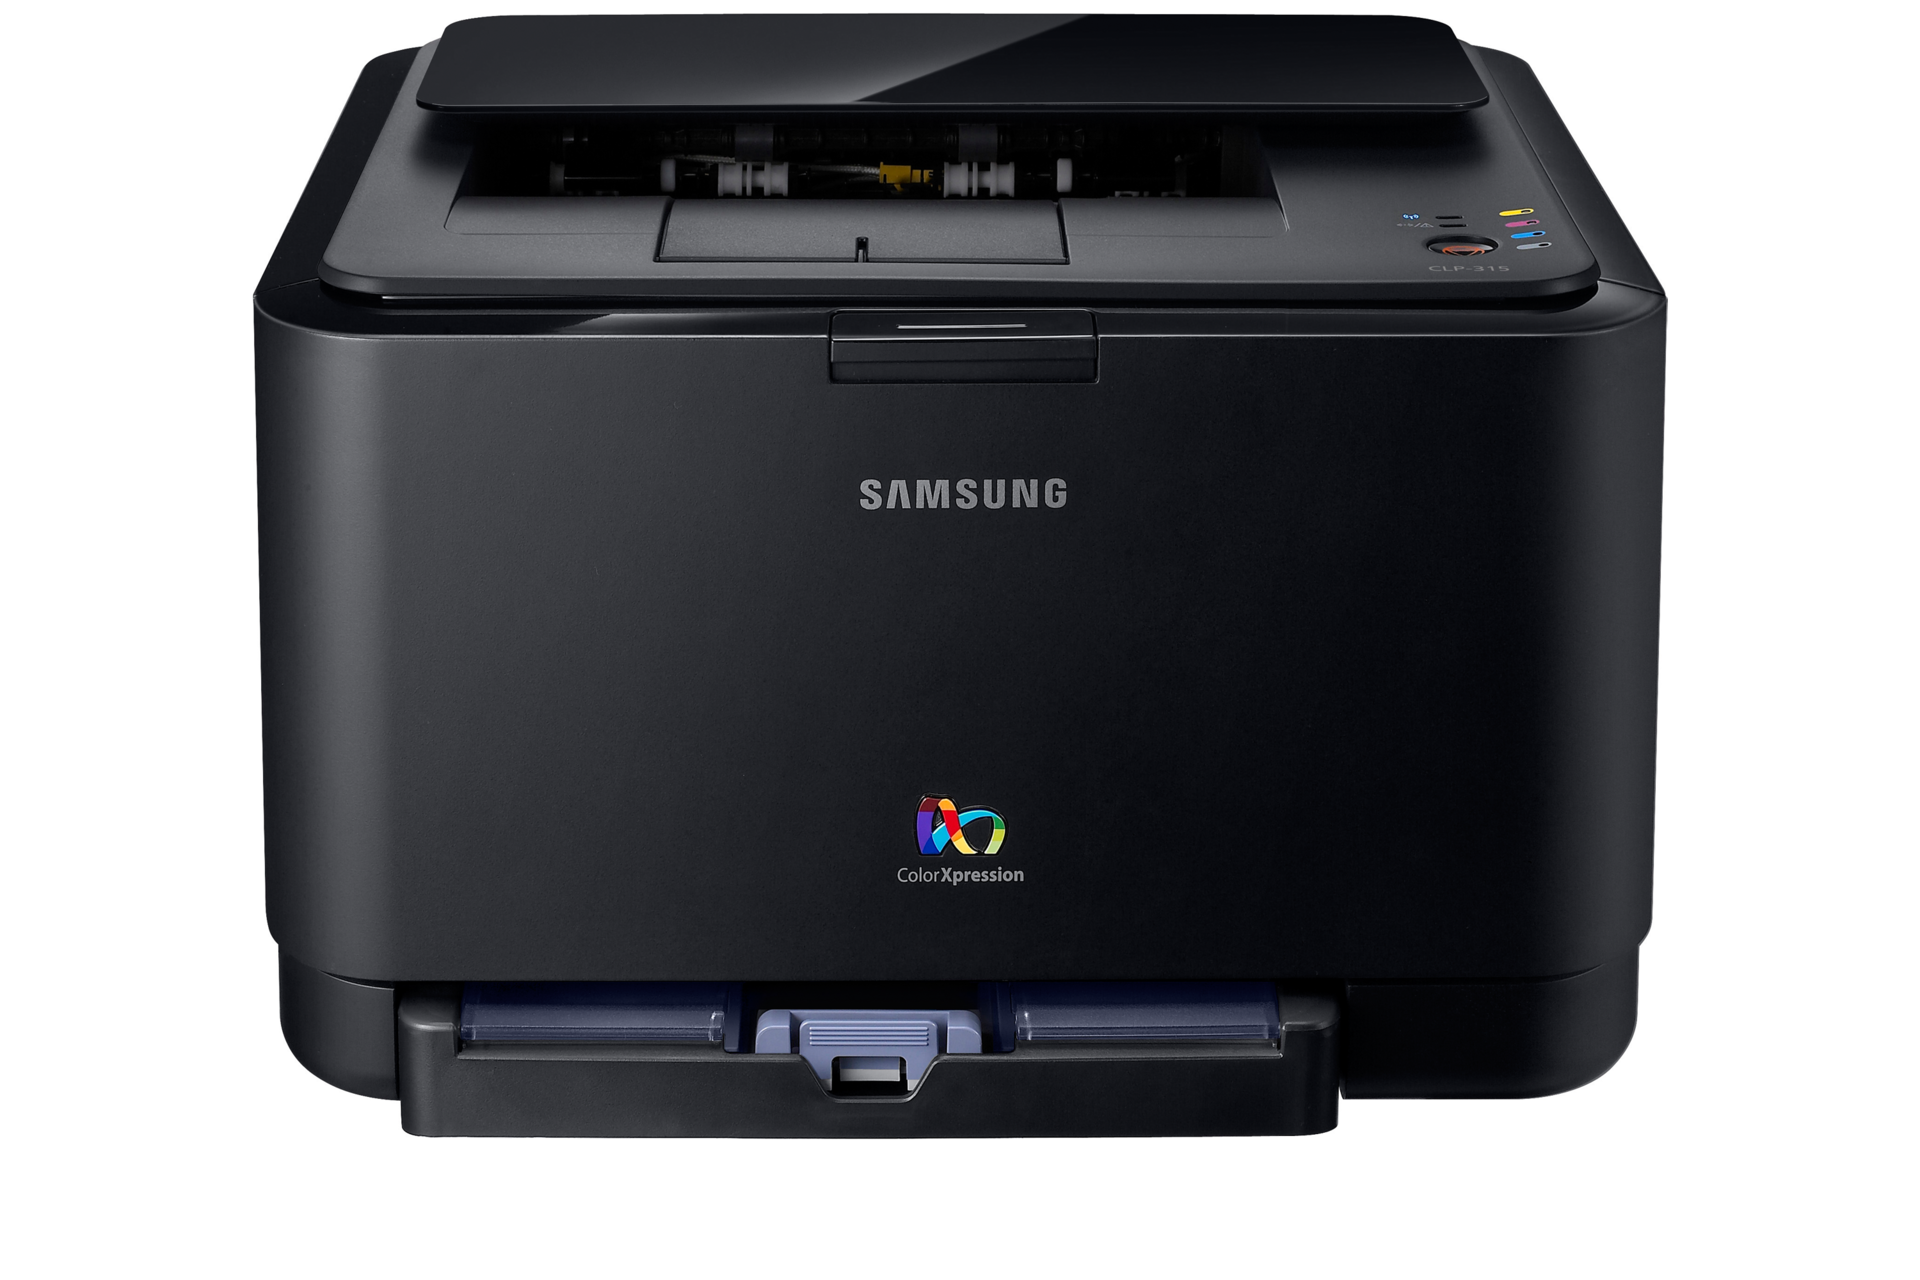   Toner on Colour Laser Printer Clp 315   Overview   Samsung